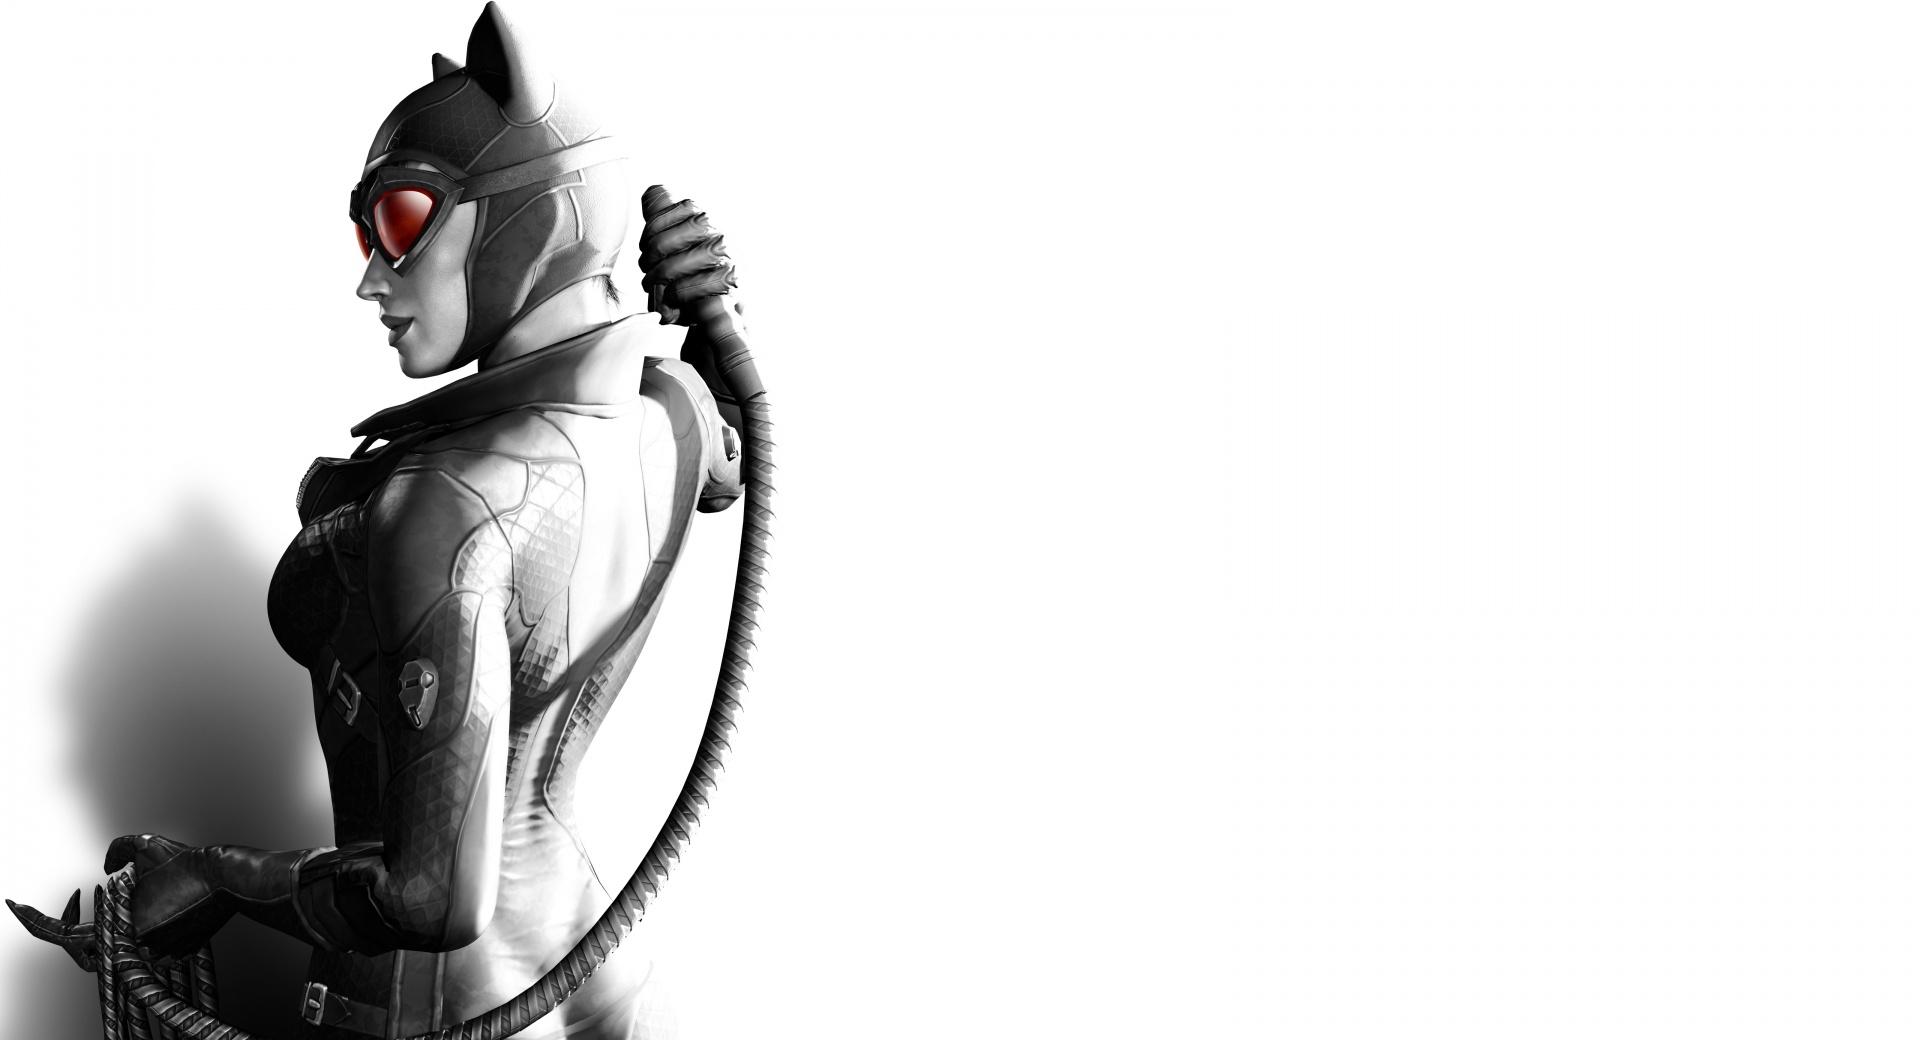 Batman Arkham City - Catwoman at 1024 x 1024 iPad size wallpapers HD quality